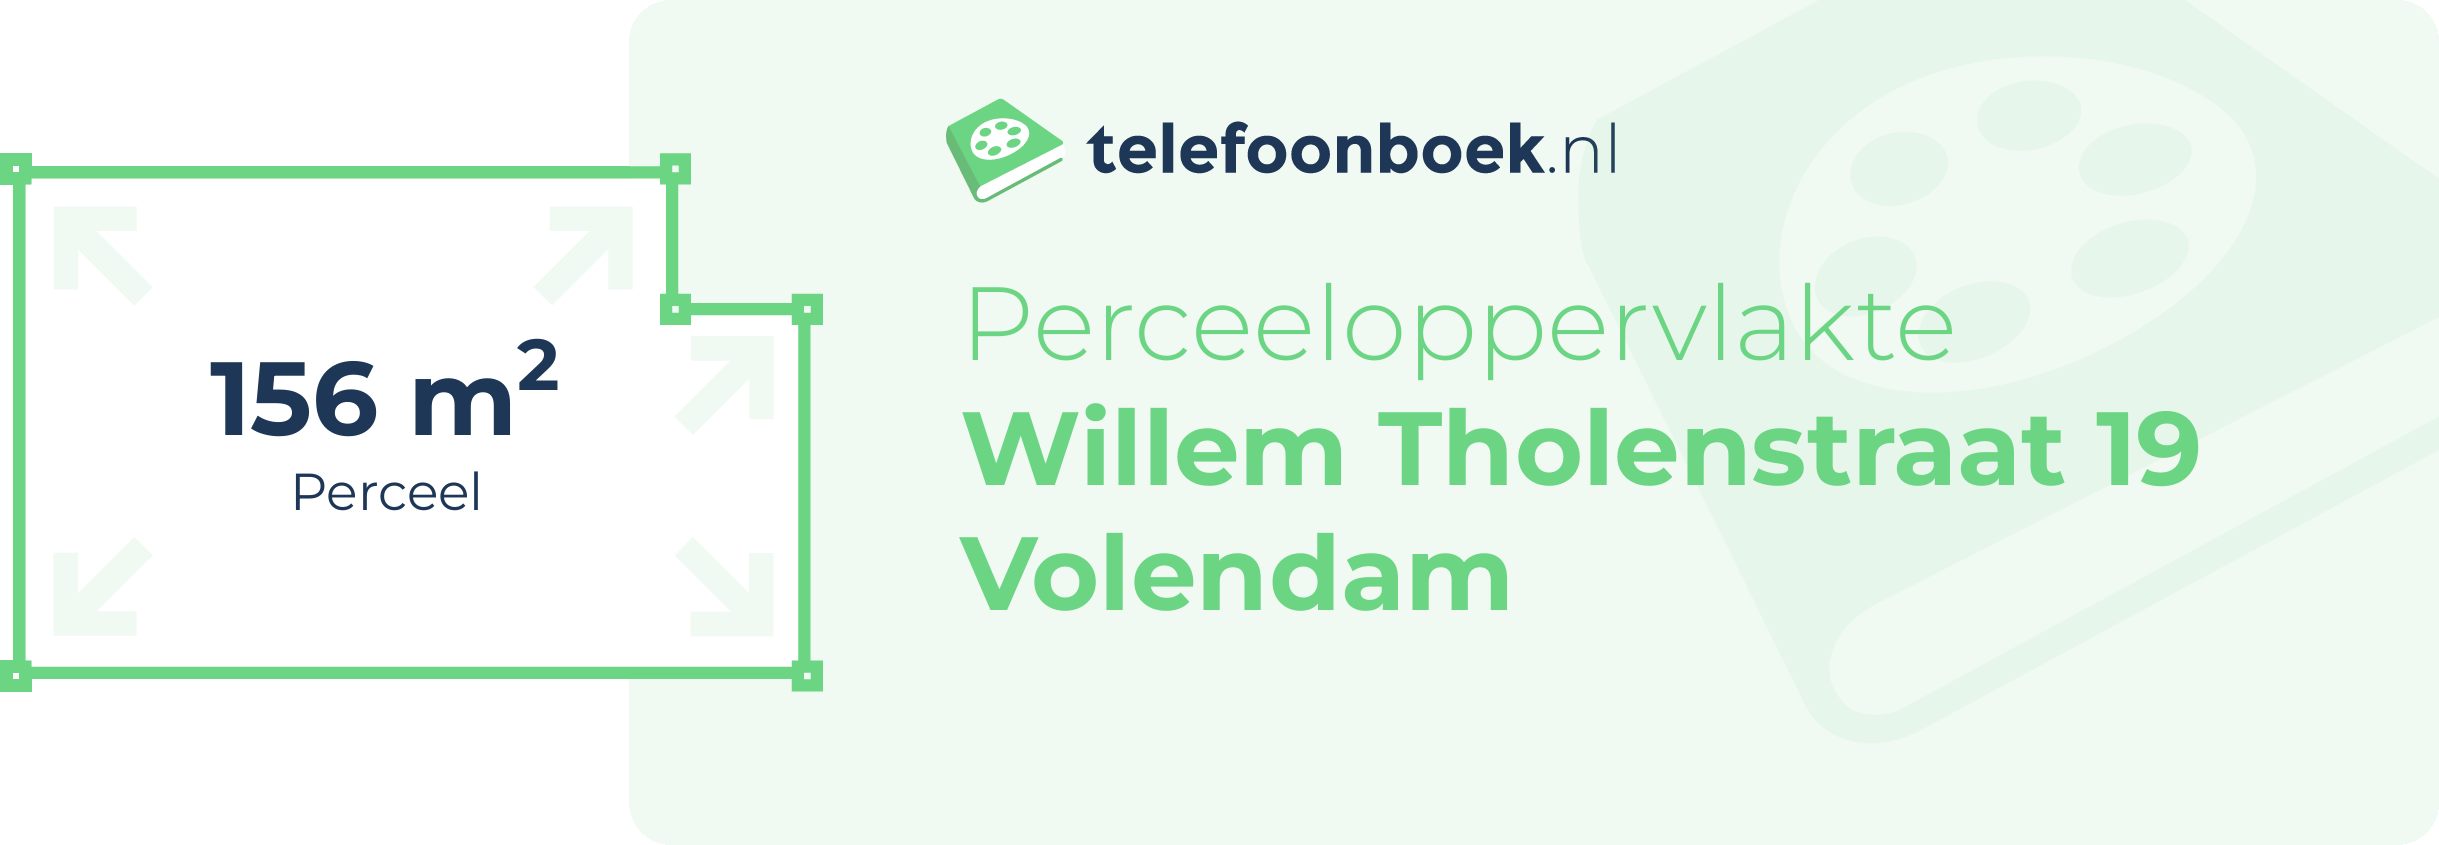 Perceeloppervlakte Willem Tholenstraat 19 Volendam